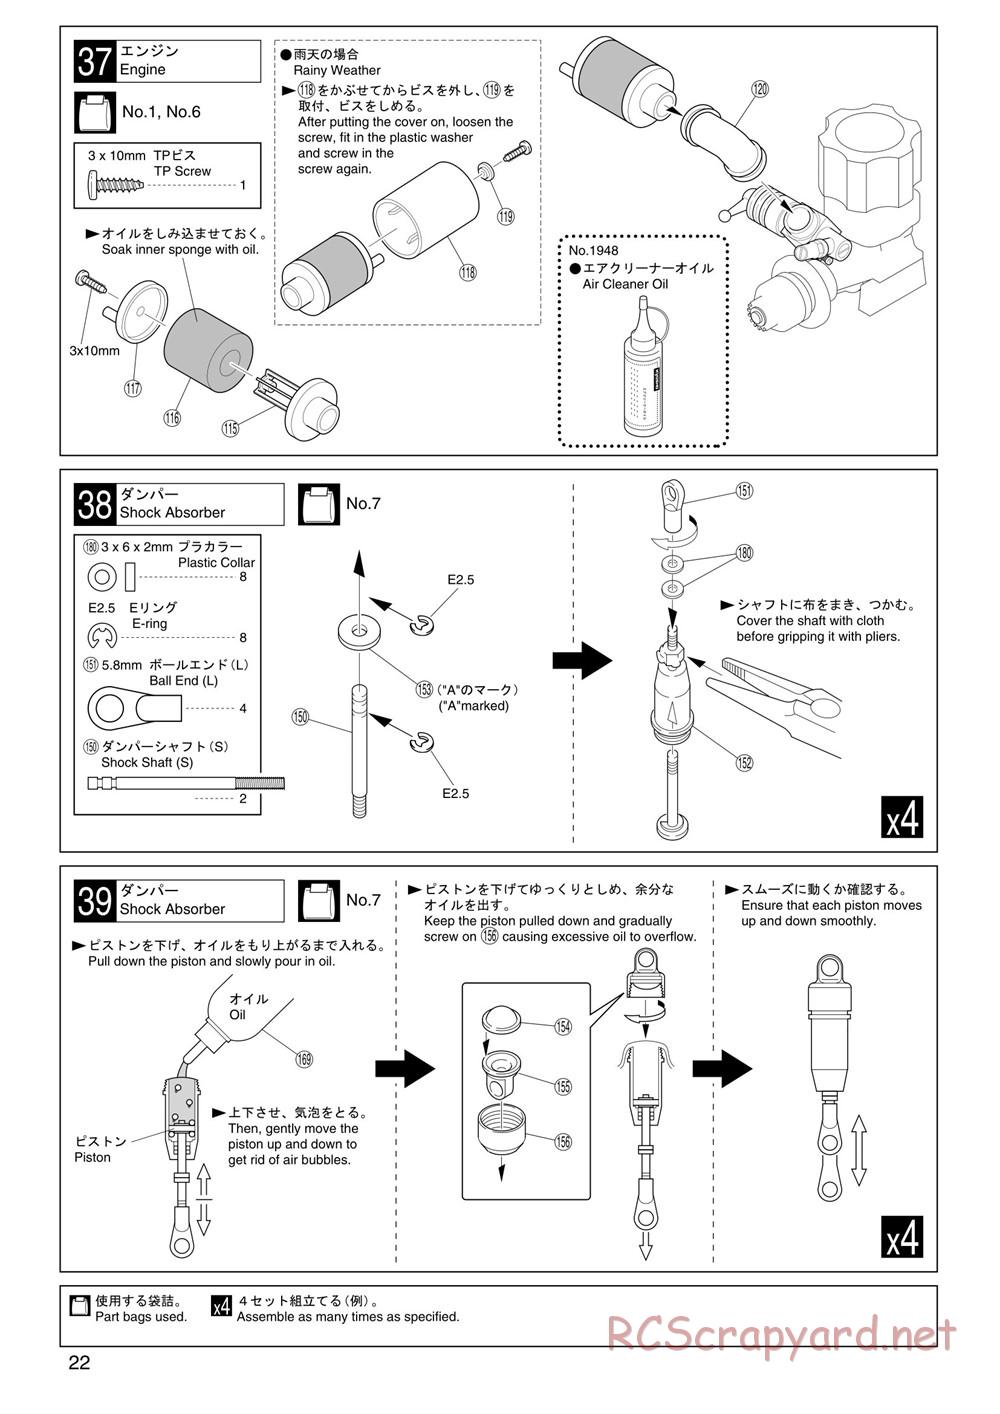 Kyosho - Super Eight GP20 Landmax 2 - Manual - Page 22